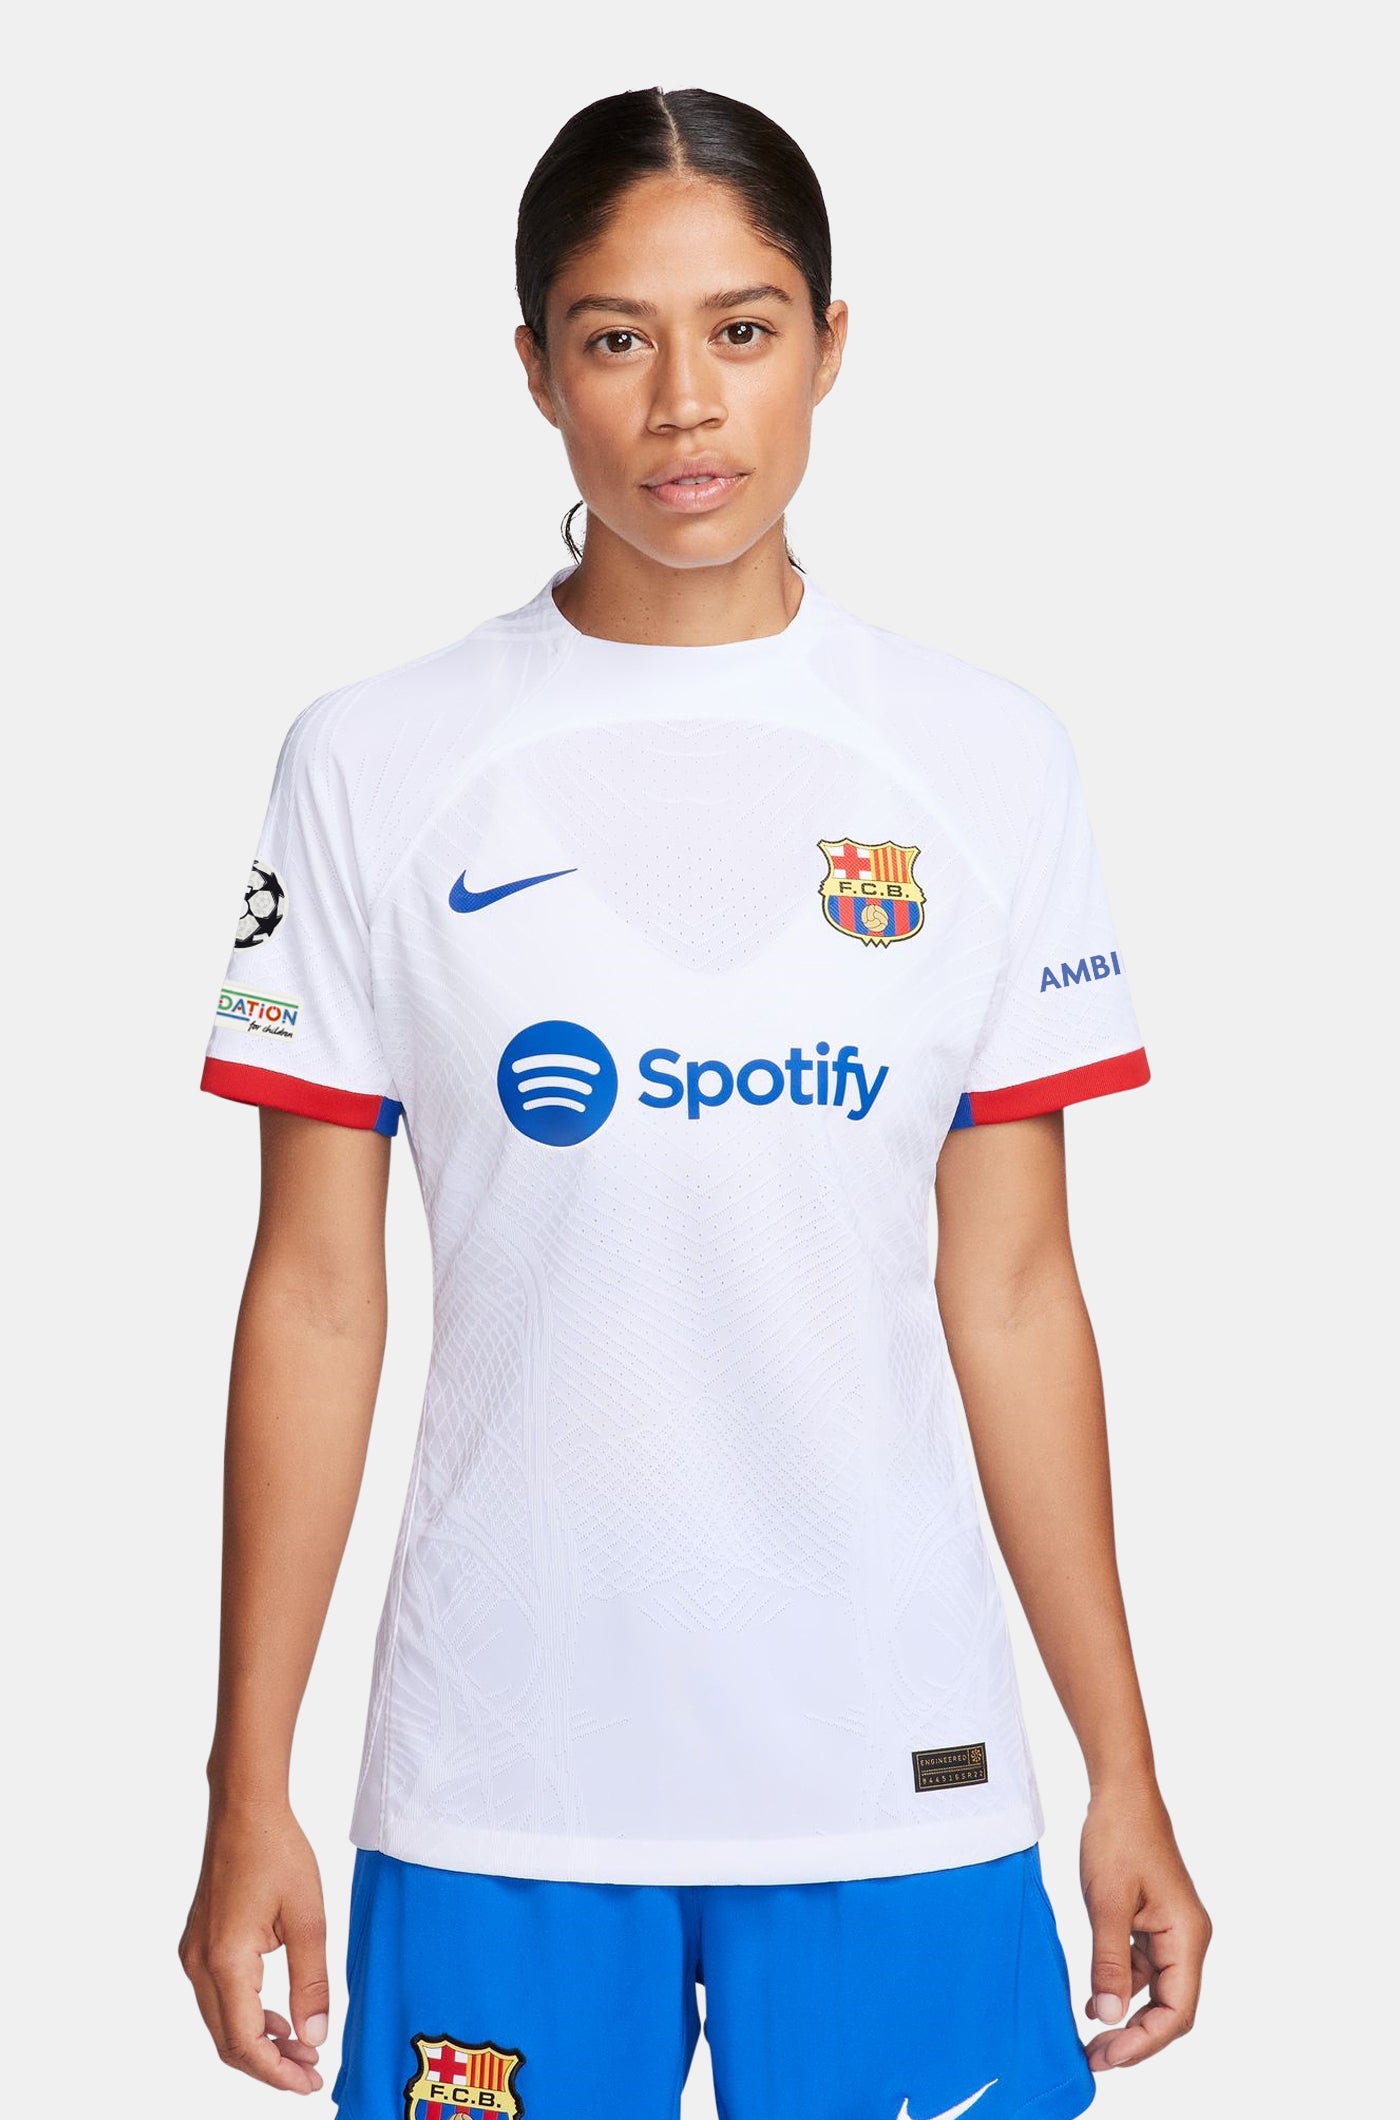 UCL FC Barcelona Away Shirt 23/24 Player’s Edition - Women  - I. MARTÍNEZ